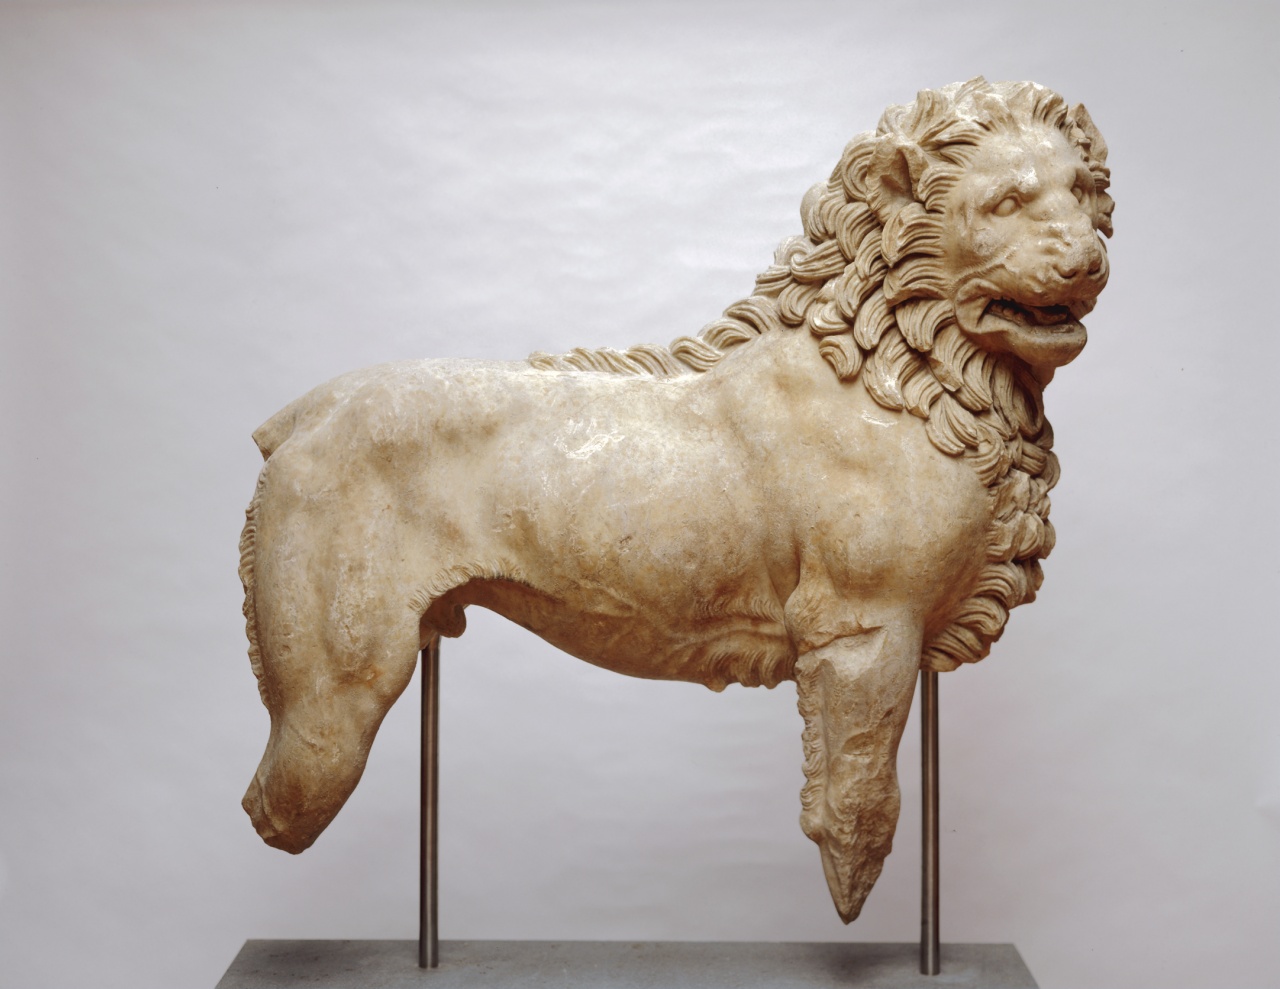 160. Lion - Classical